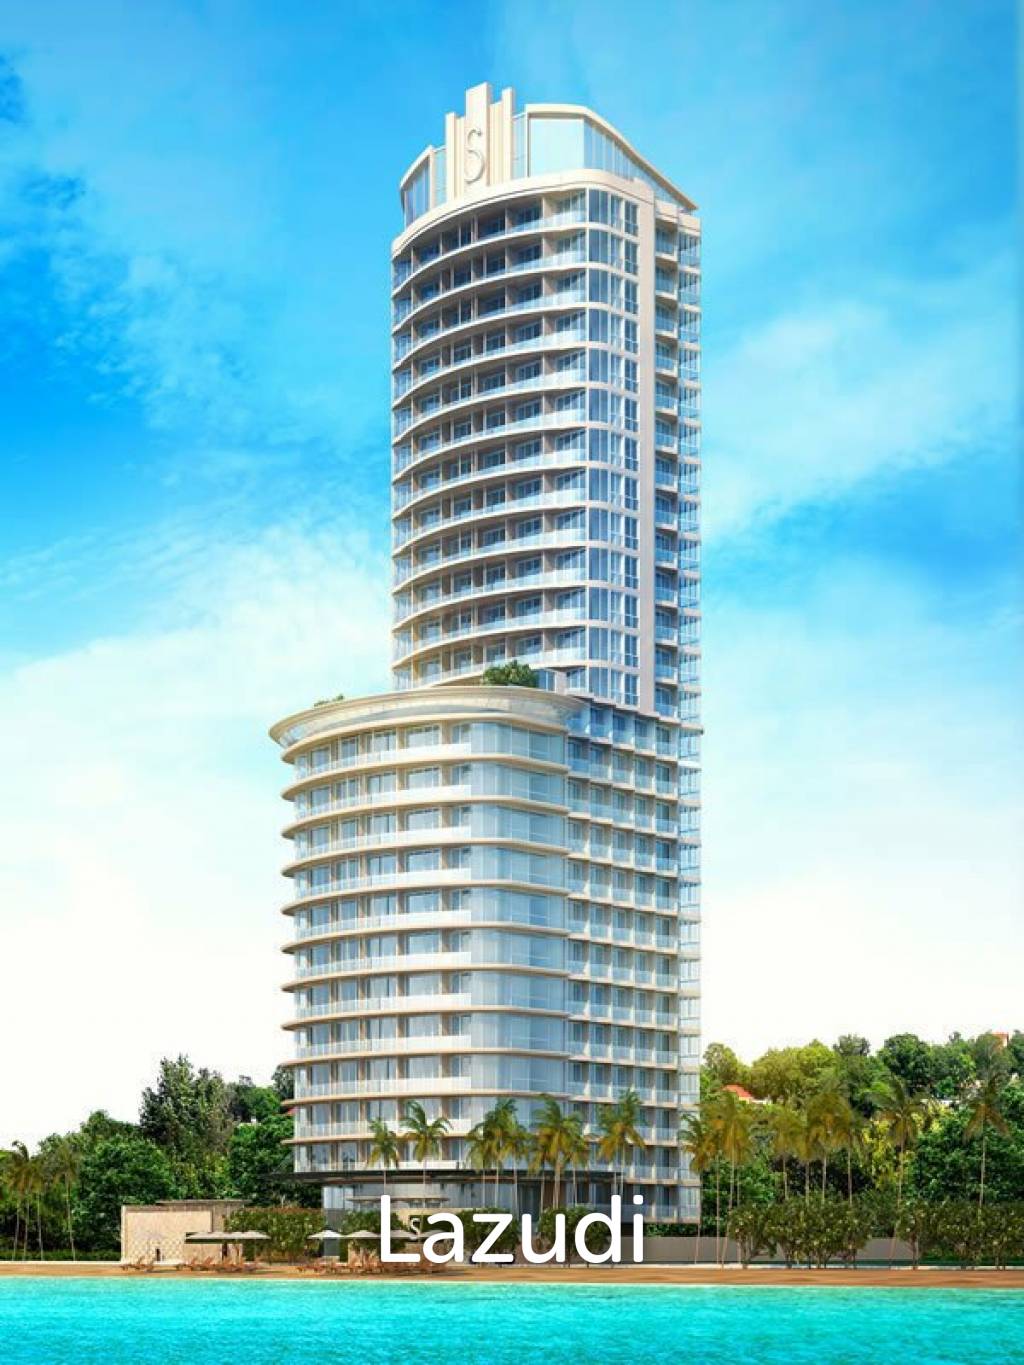 Sands Condominium (Pattaya)